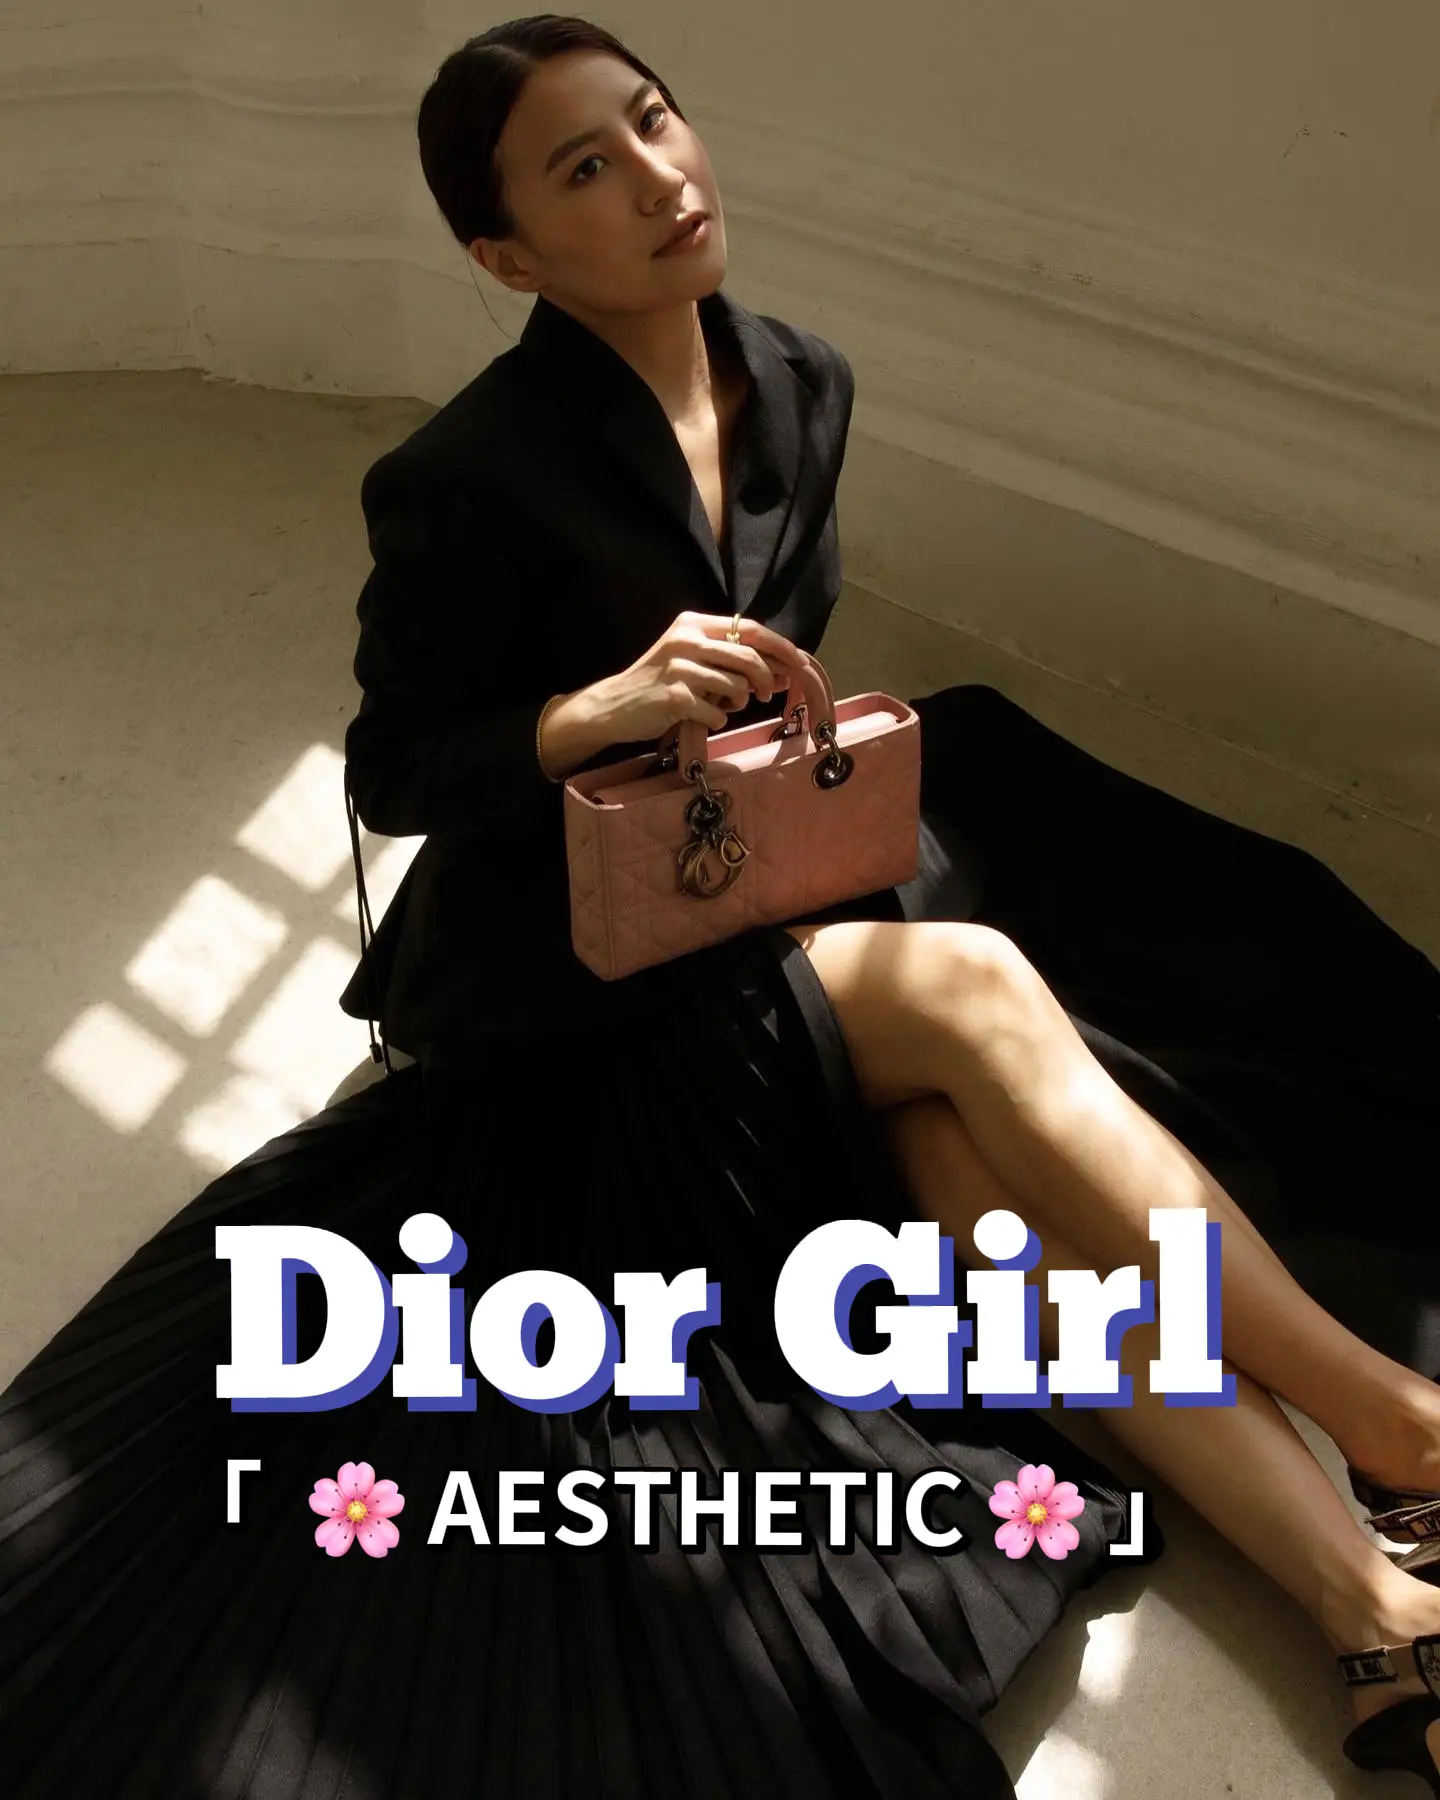 Dior girl